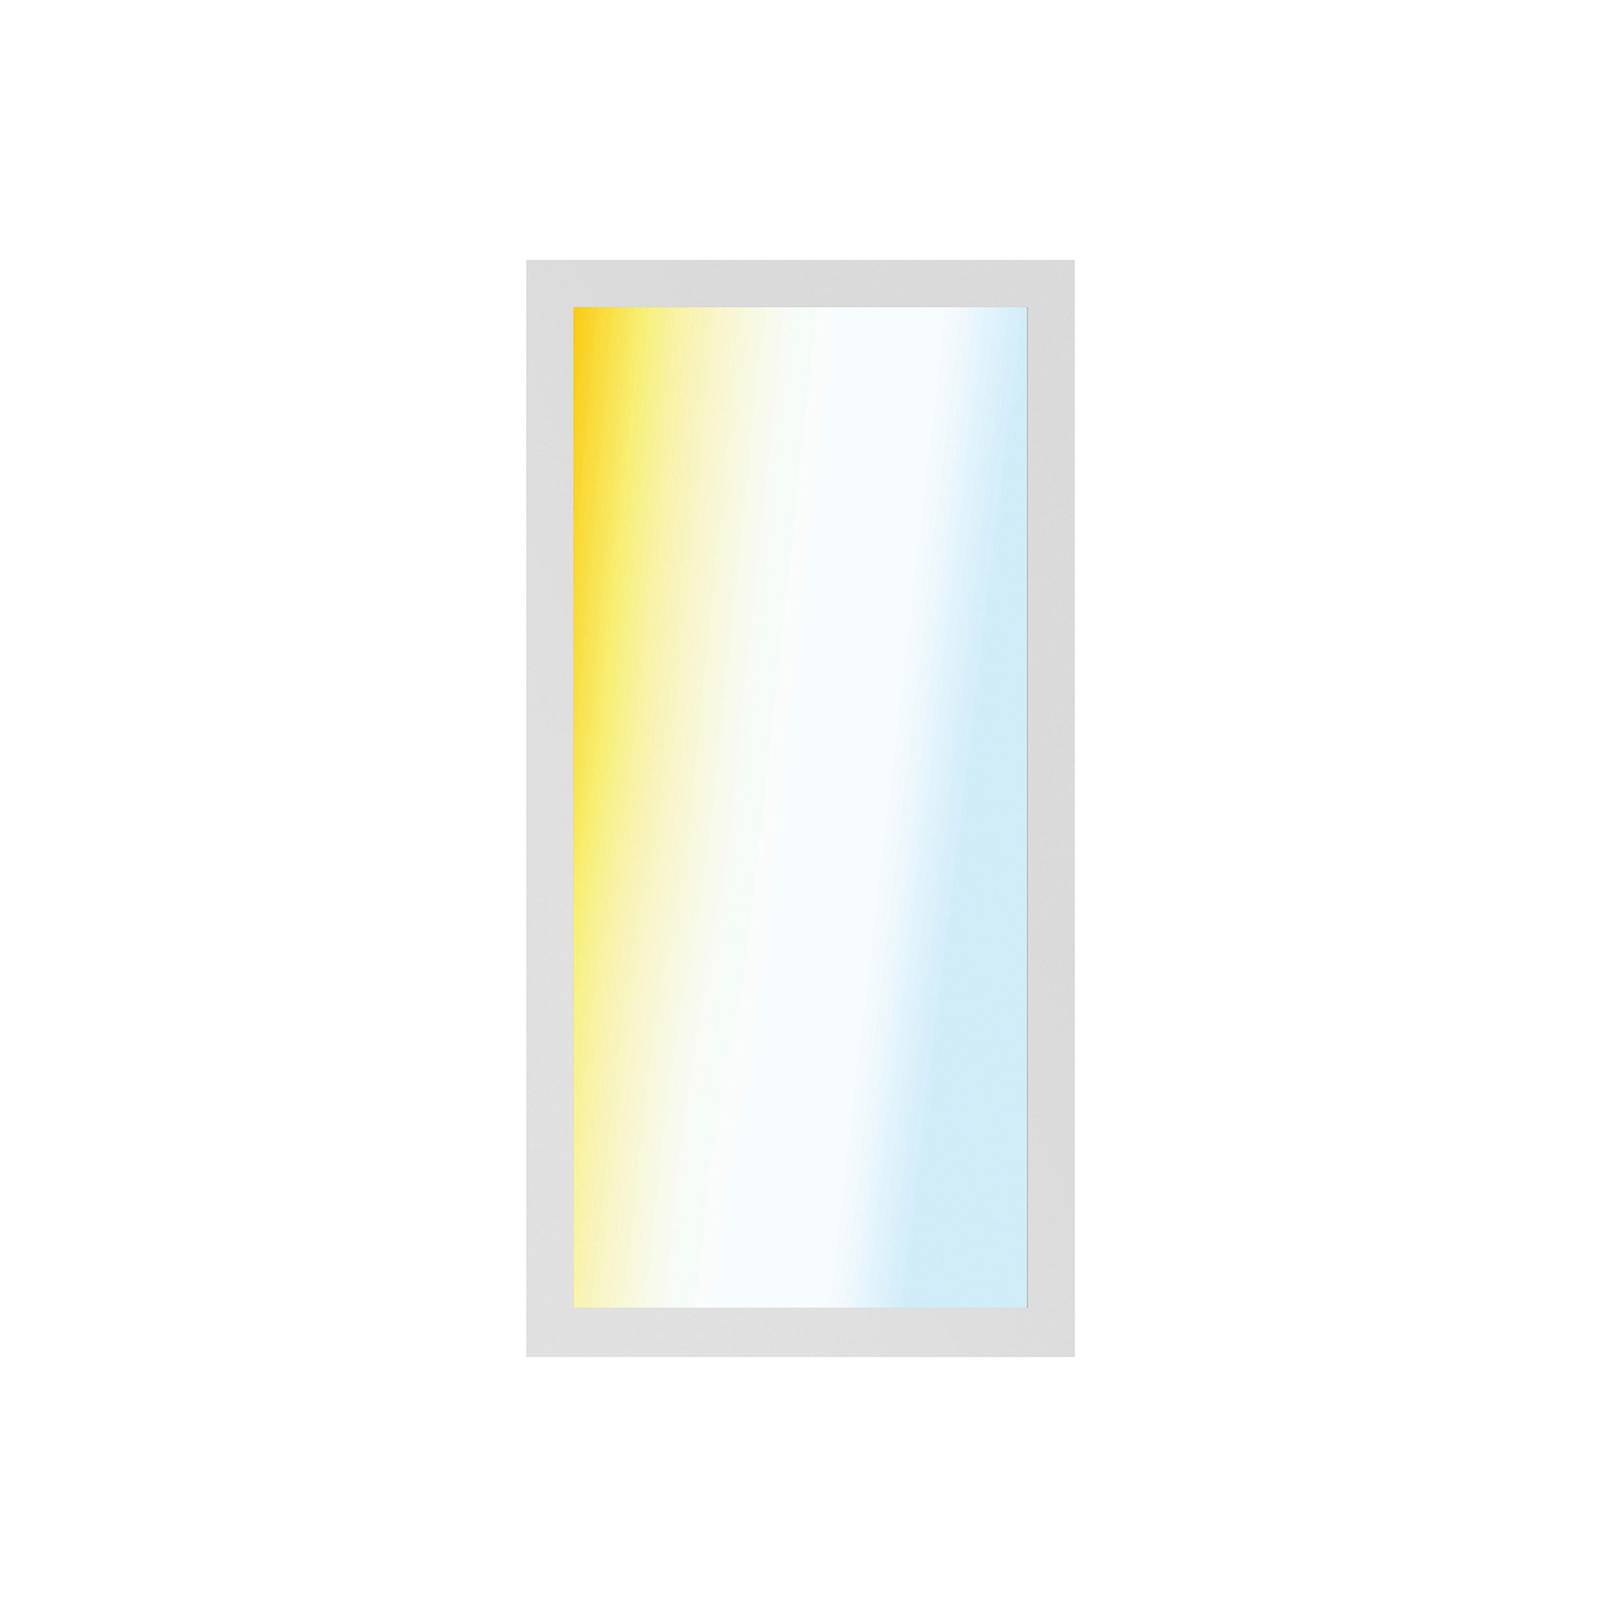 Müller-licht calida switch tone led-es panel, 60 x 30 cm